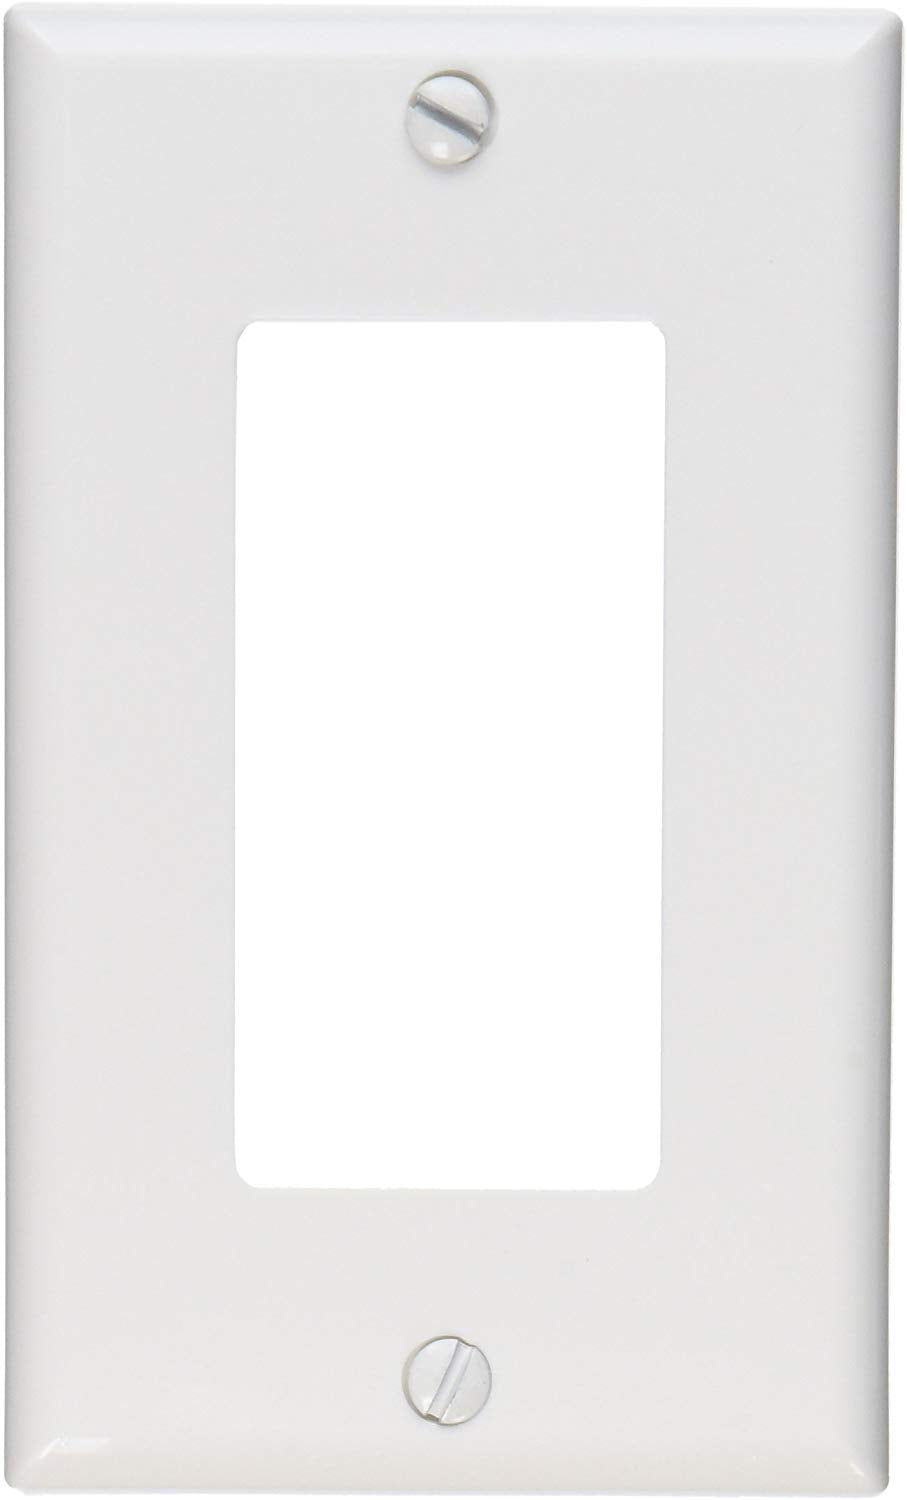 Leviton 80401-NW 1-Gang Decora/GFCI Device Wallplate, Standard Size, Thermoplastic Nylon, Device Mount, White - Consavvy